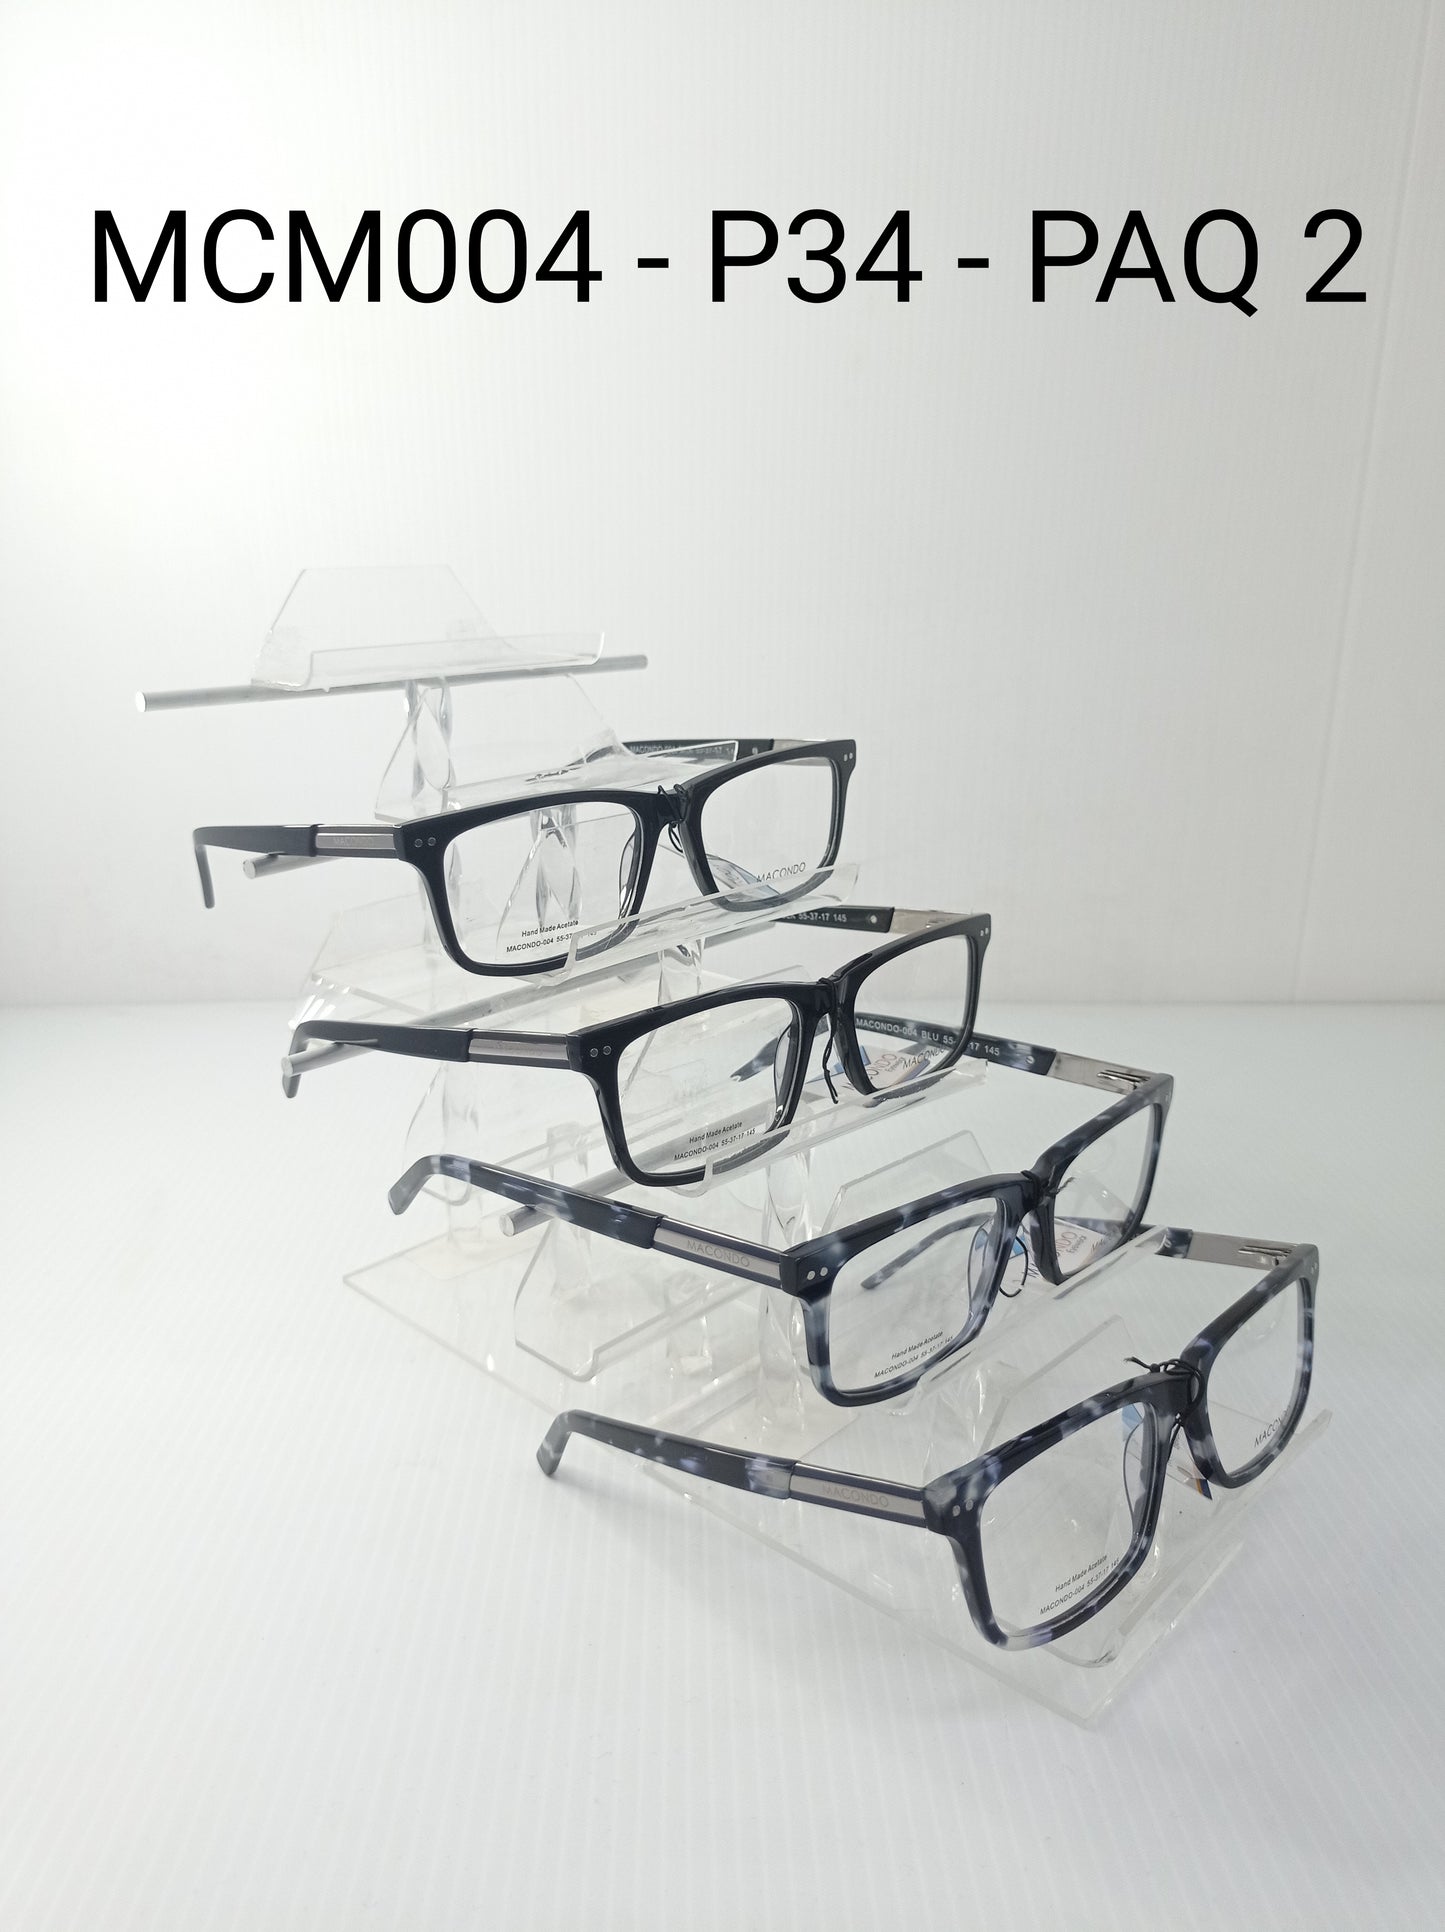 MACONDO - MCM004 - P34